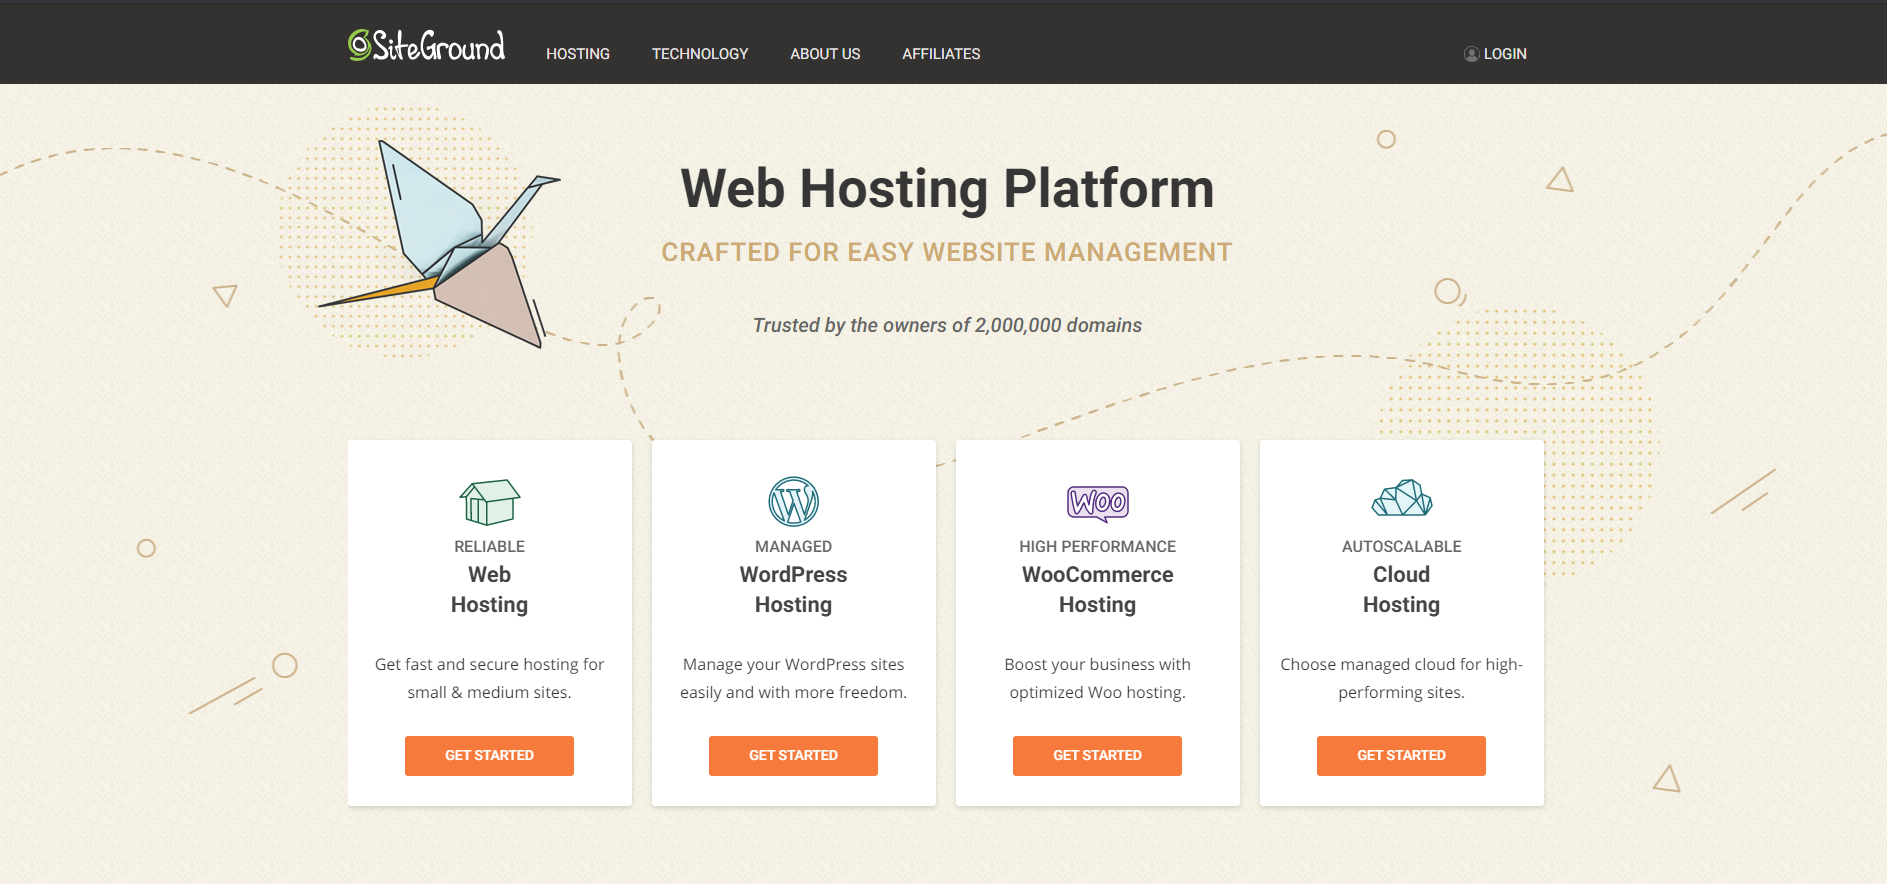 SiteGround WordPress hosting